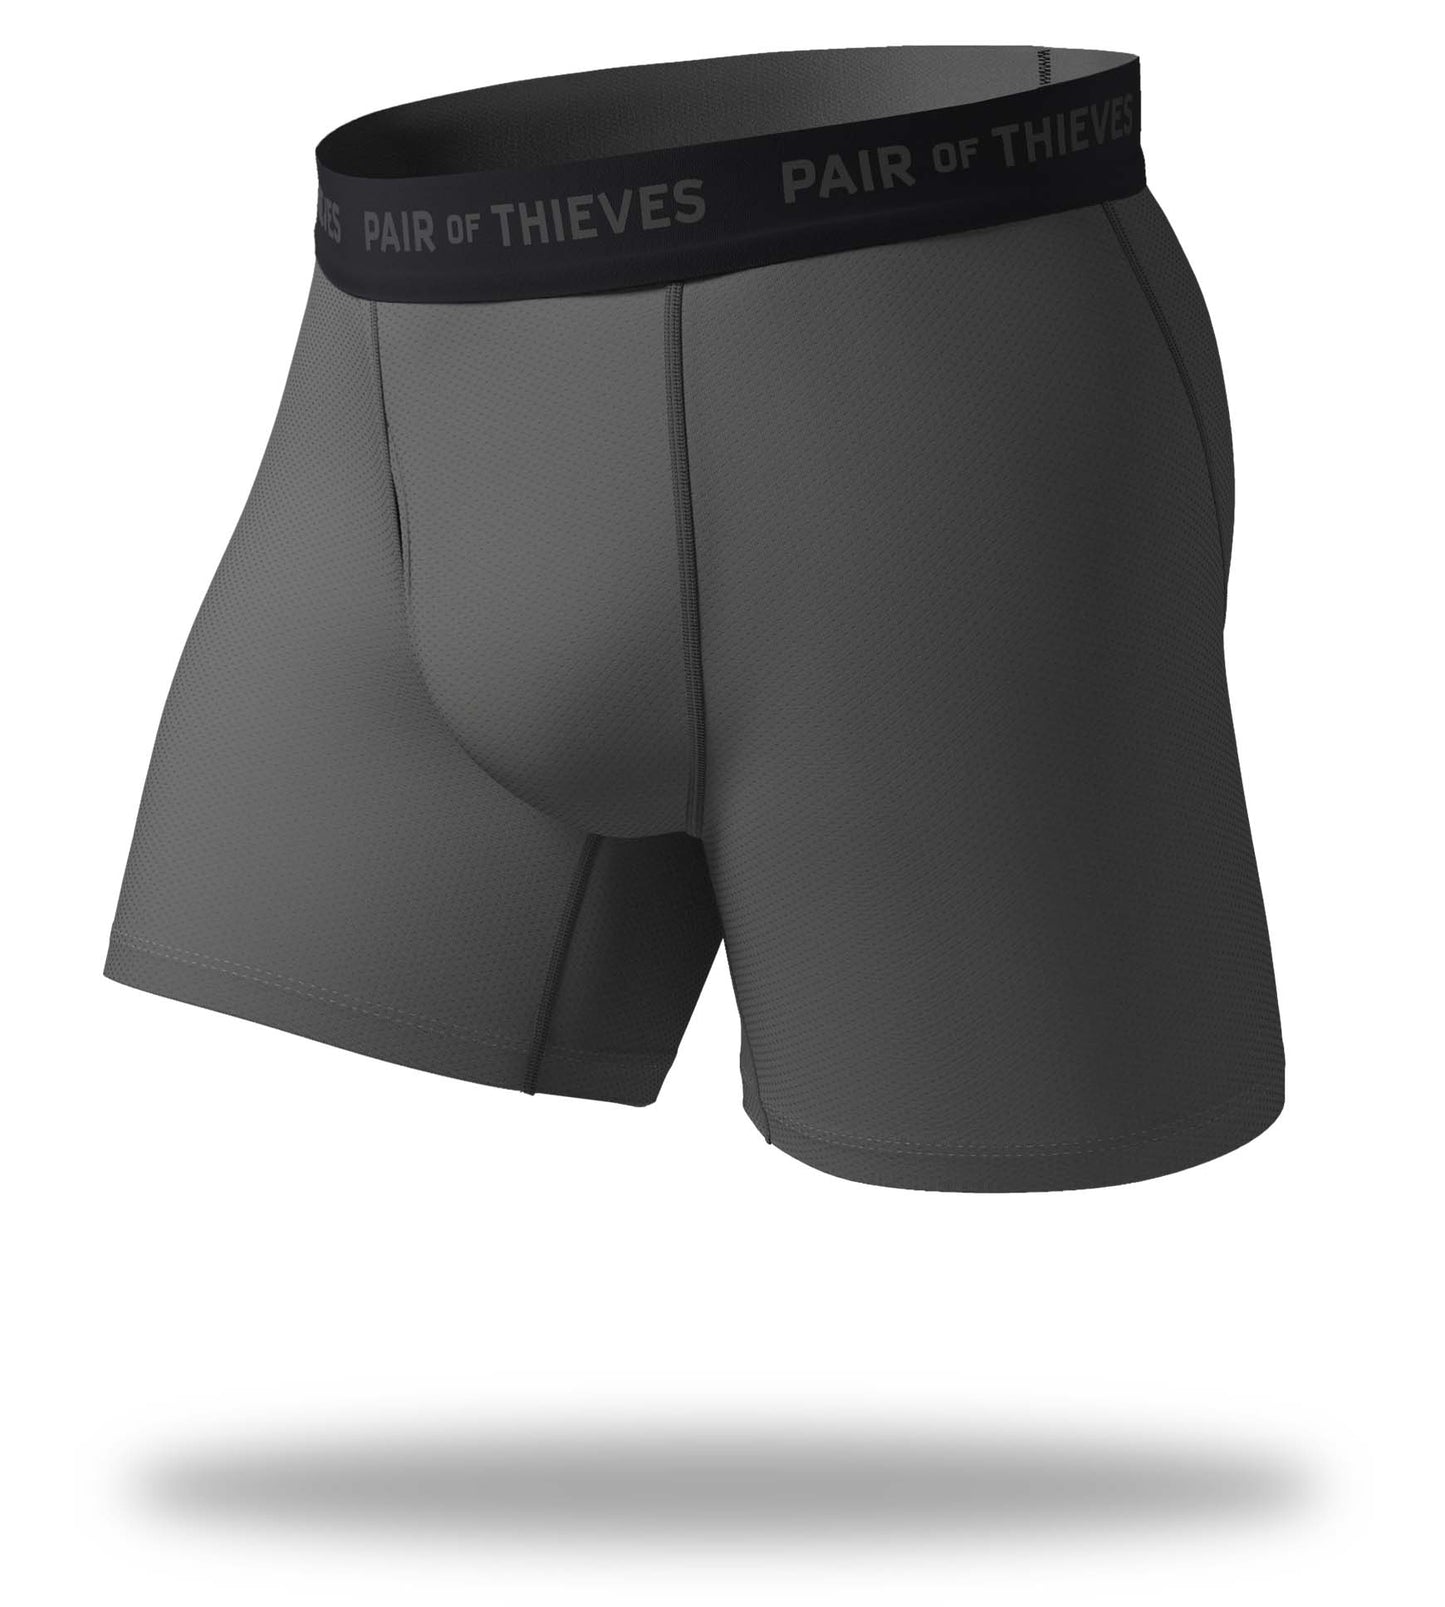 SuperFit Boxer Briefs, grey with grey logo on black waistband